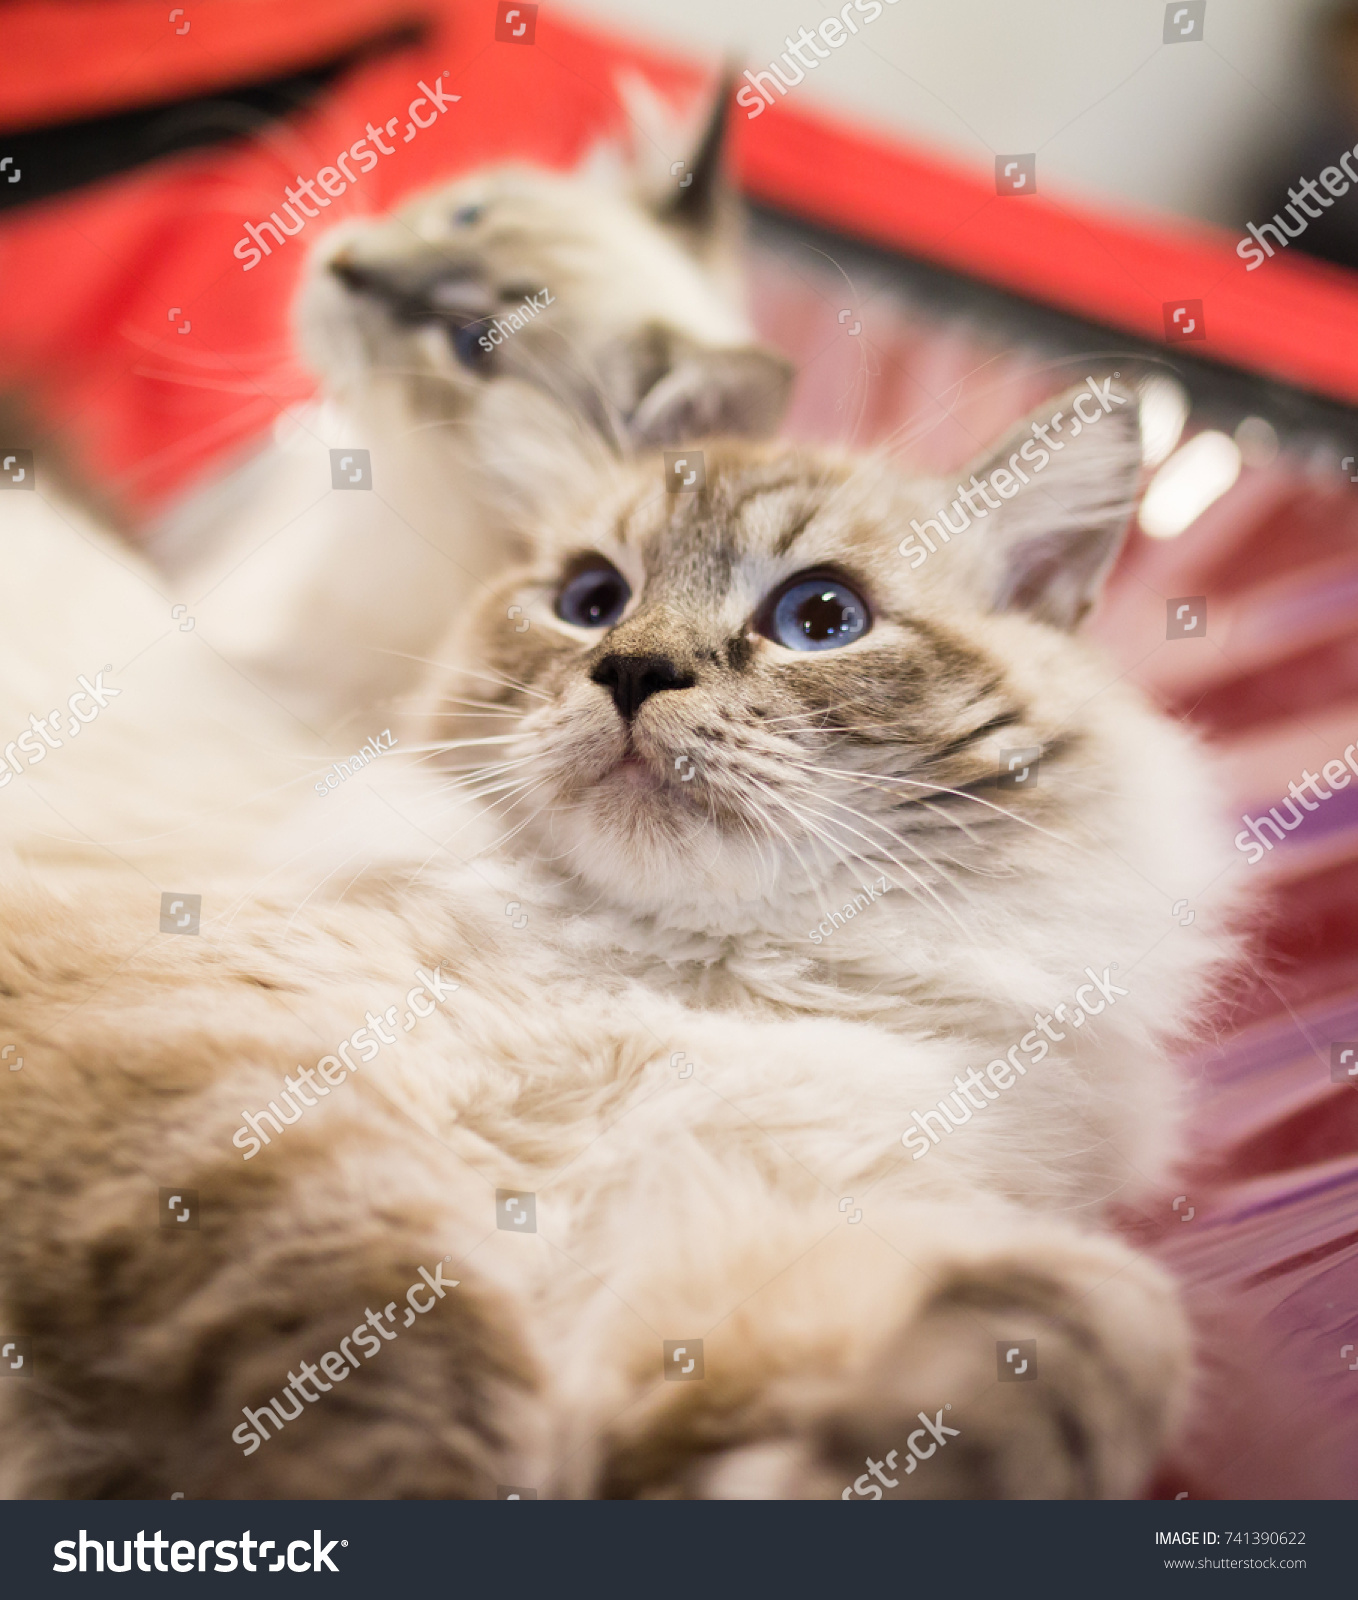 Portrait Thoroughbred Cat Exhibition Stock Photo 741390622 ...